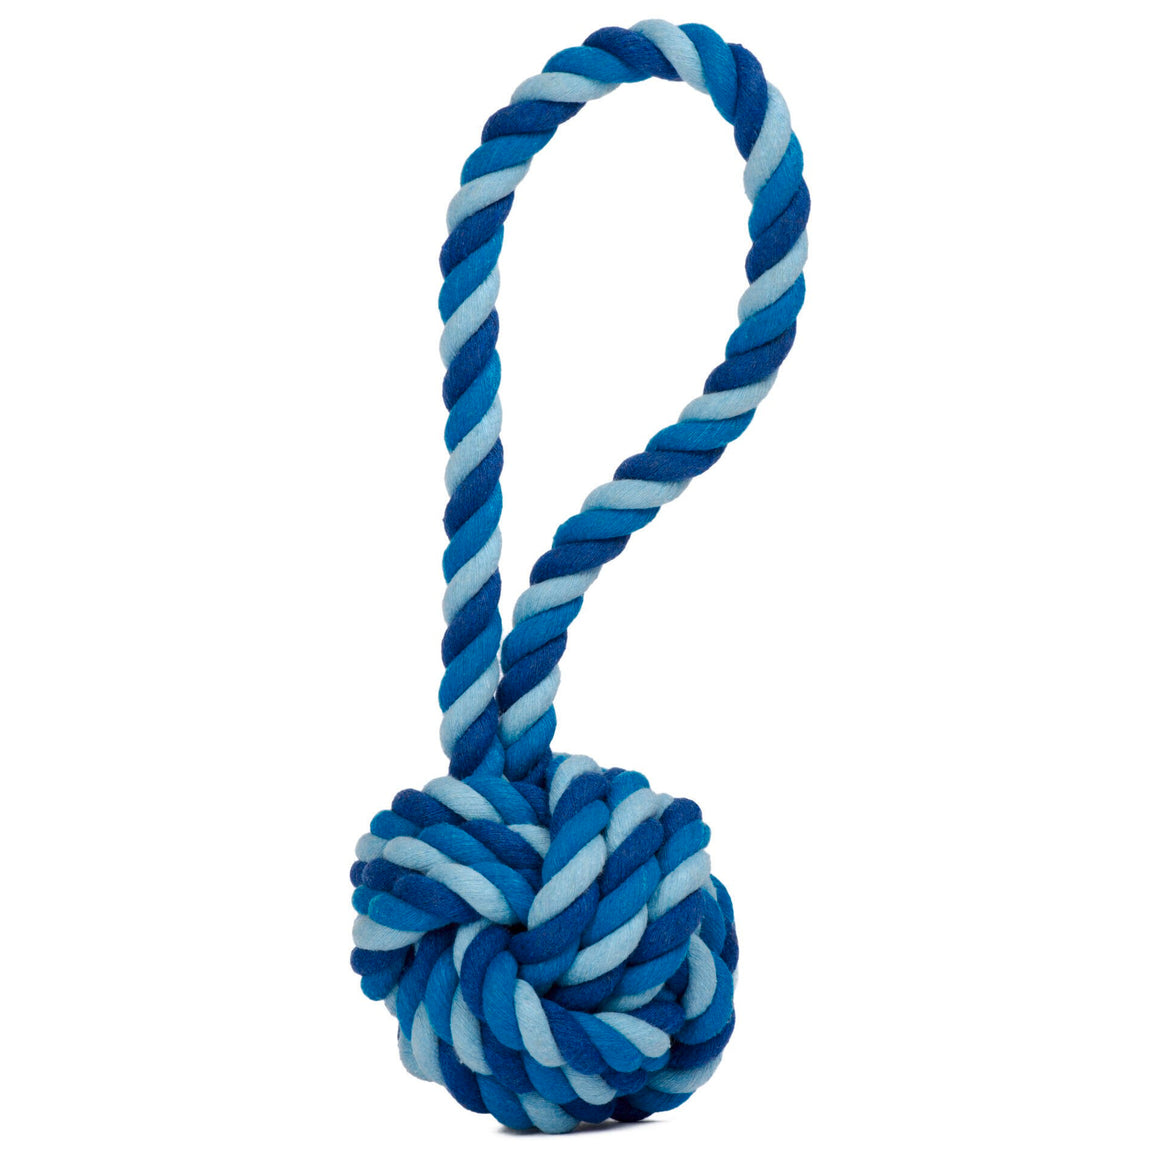 Mini Schleuderball Seilspielzeug - Hund Blau 6x6x13 cm